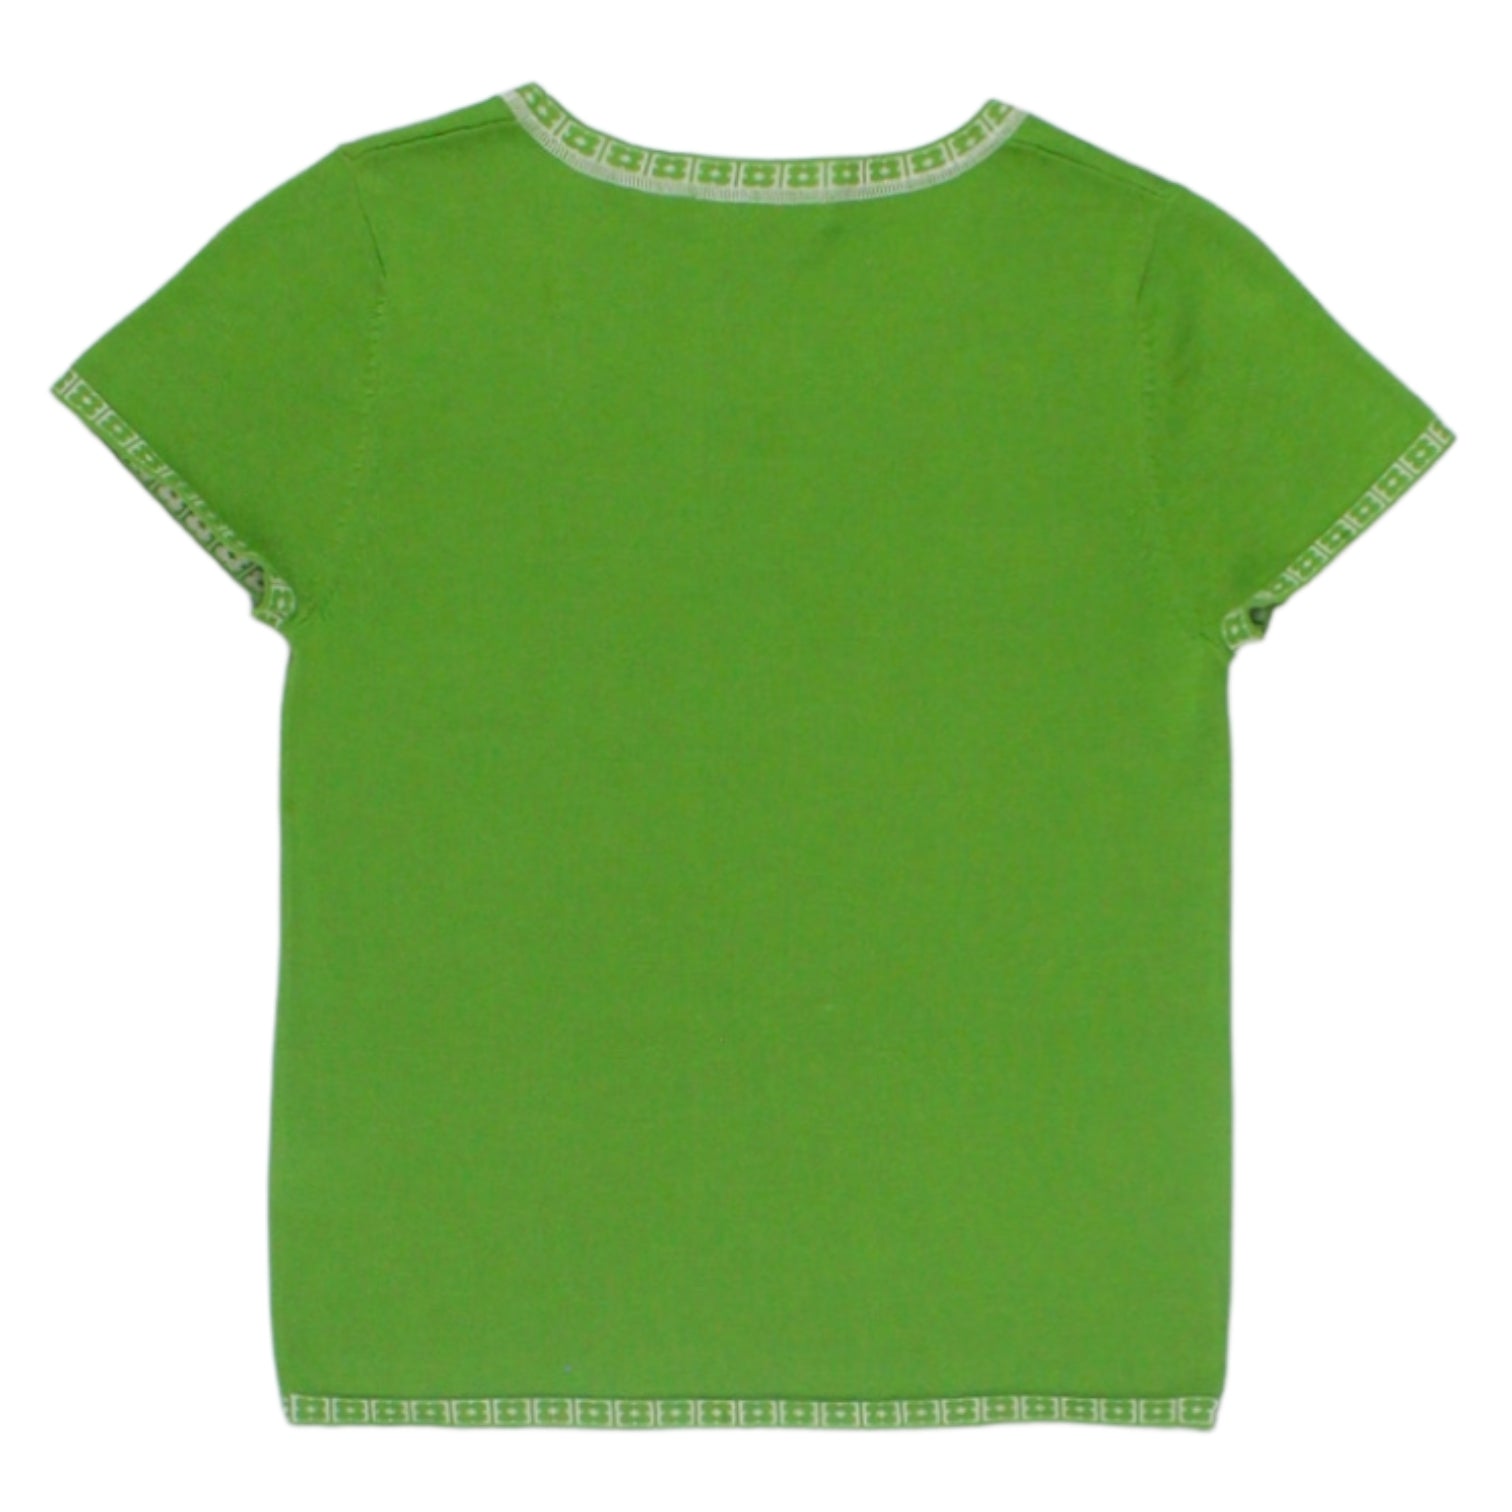 Orla Kiely Green Short Sleeve Top